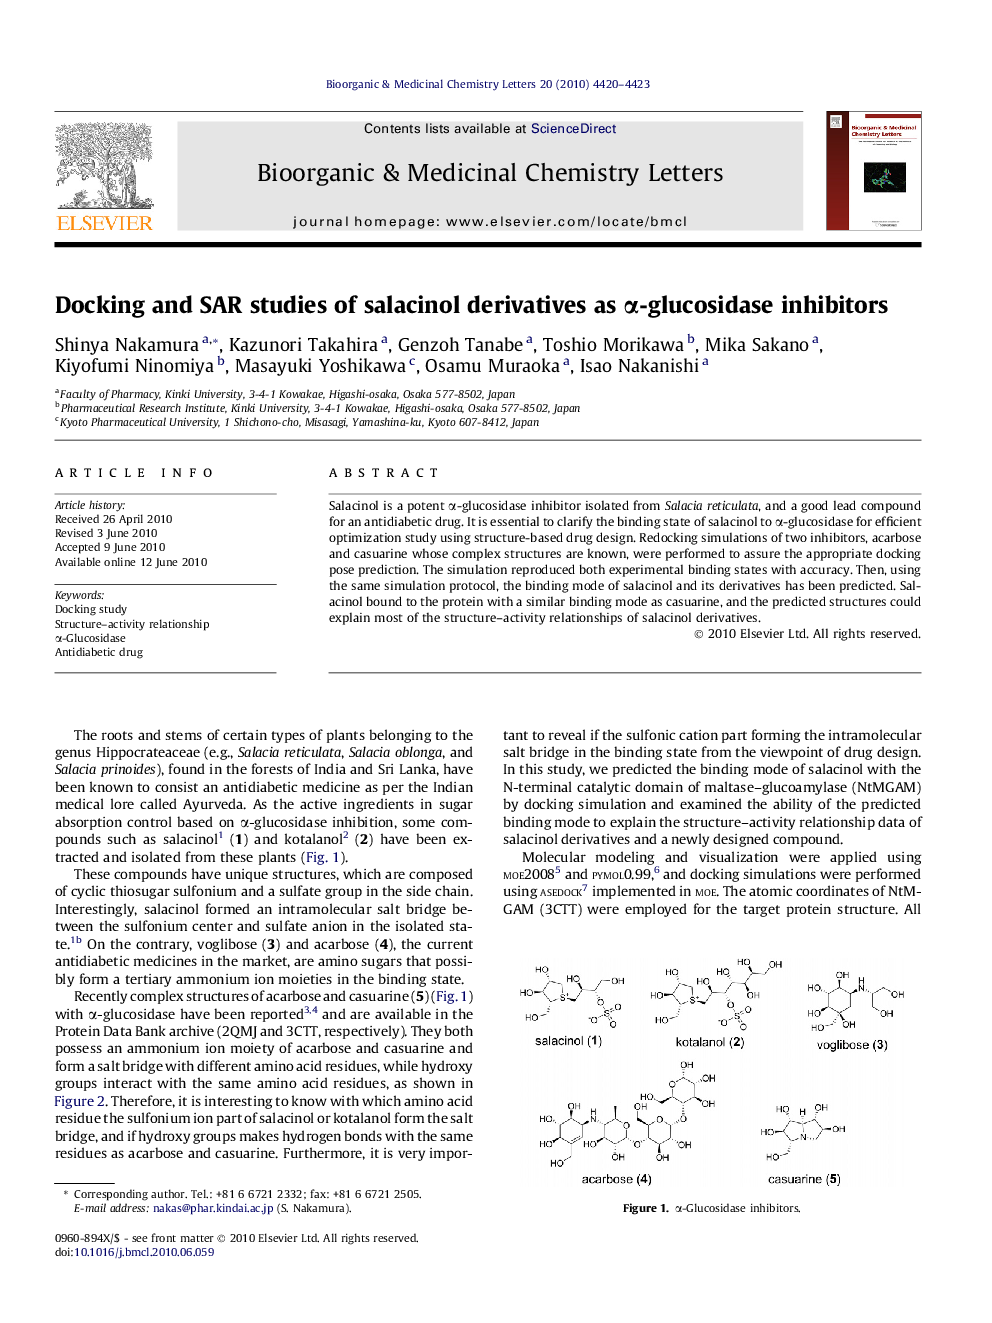 Docking and SAR studies of salacinol derivatives as Î±-glucosidase inhibitors